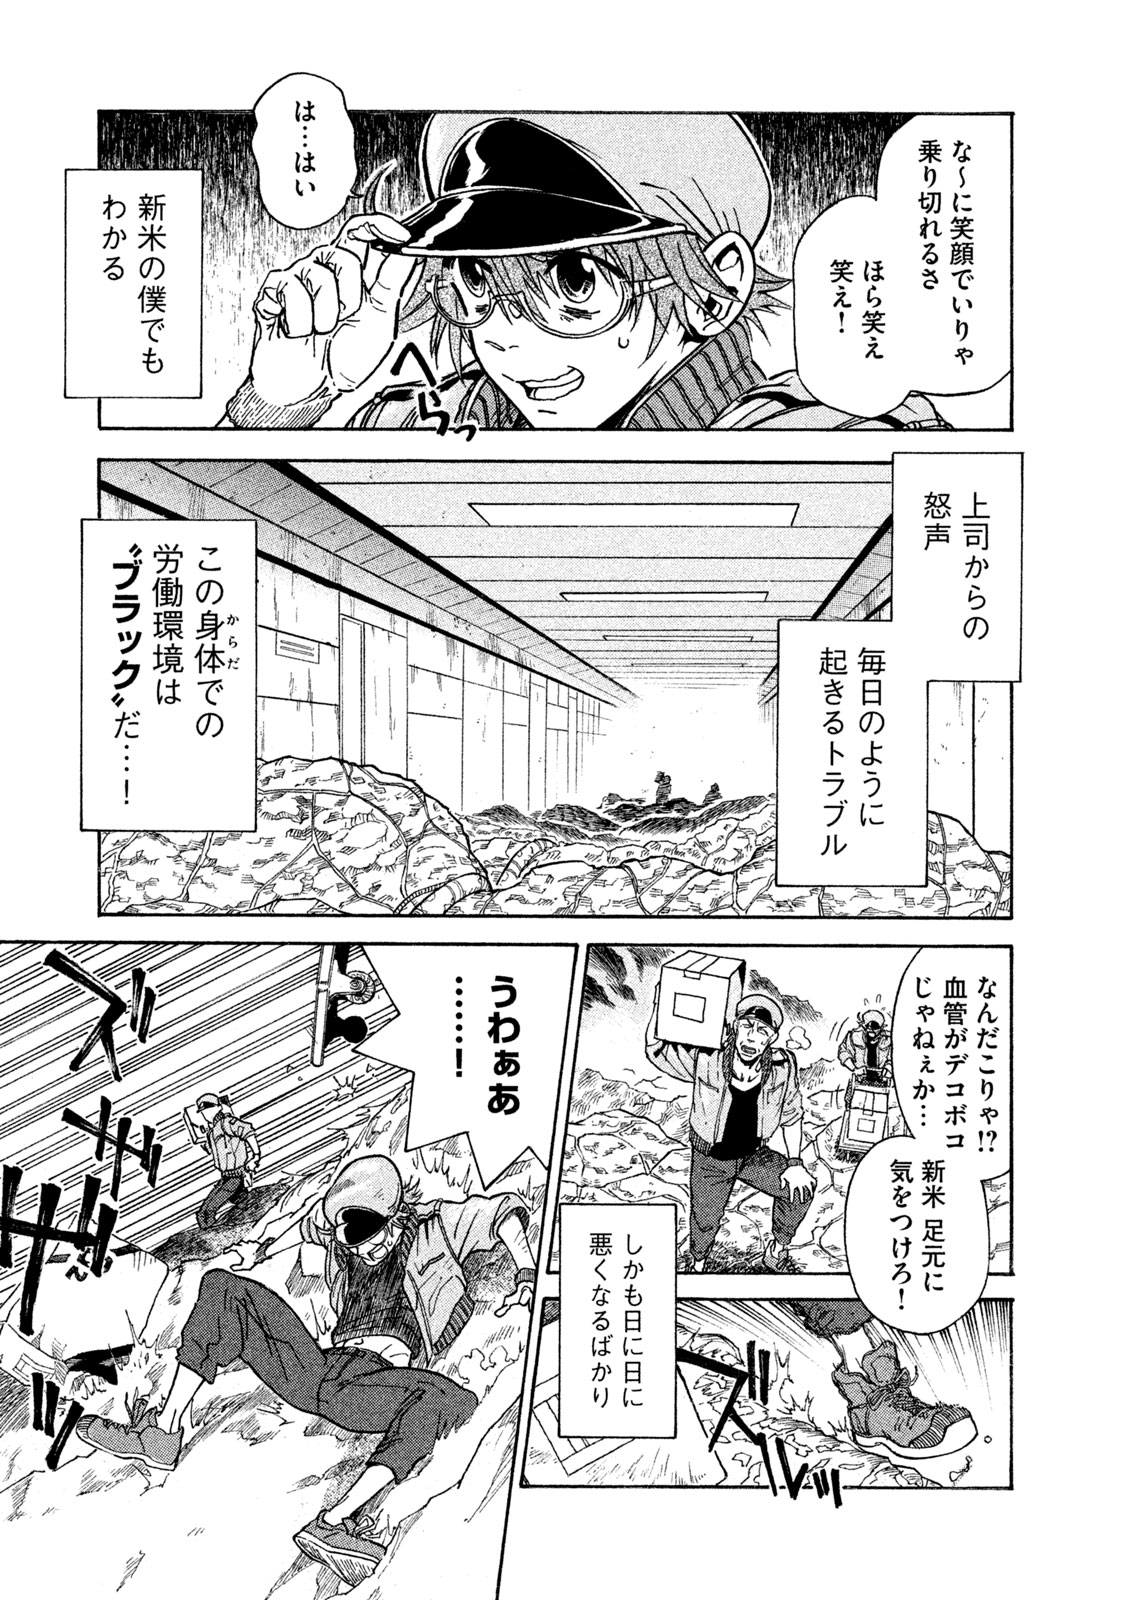 Hataraku Saibou BLACK - Chapter 1 - Page 11